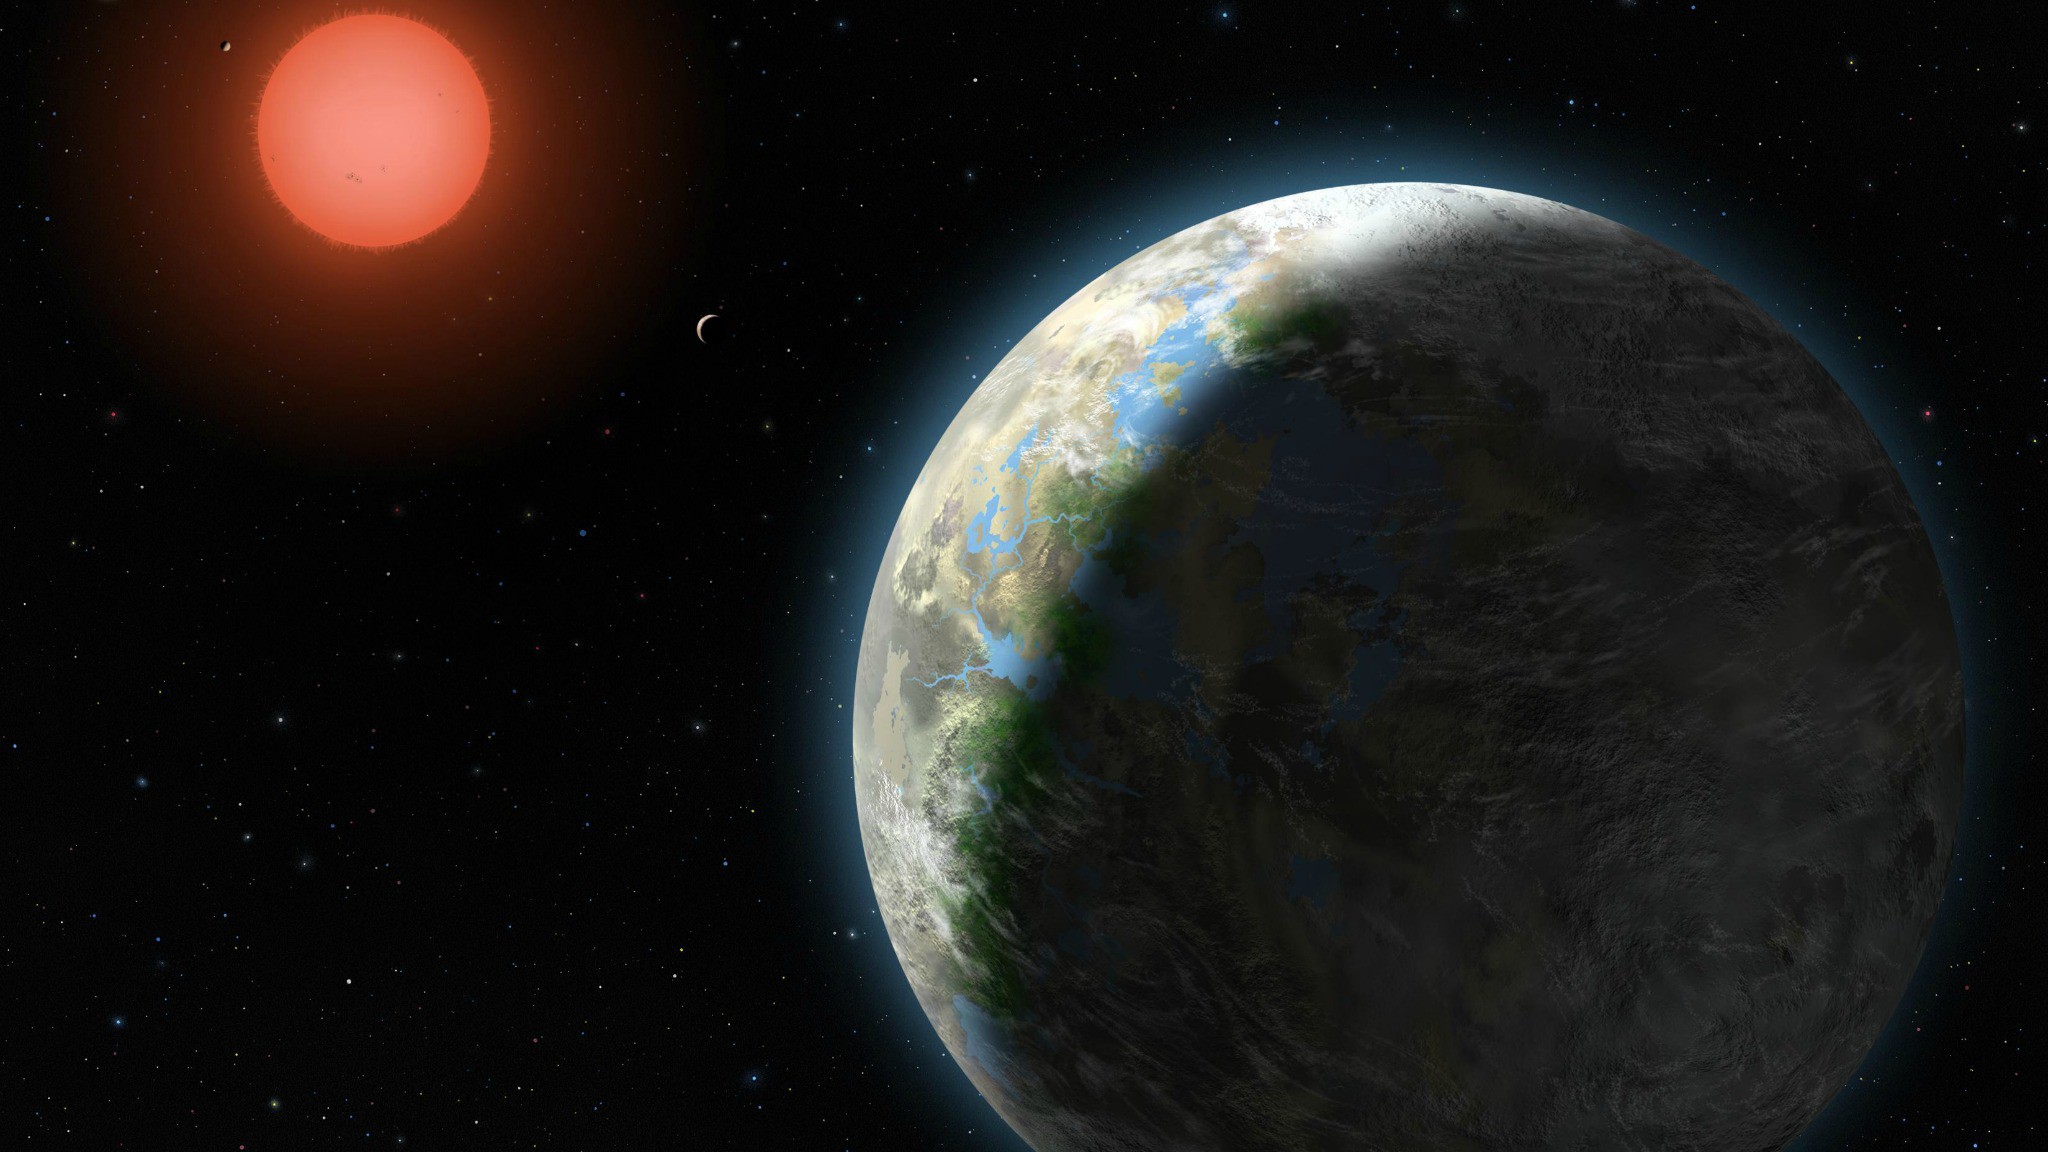 Gliese 581 g. Жизнь на других планетах, земля, космос